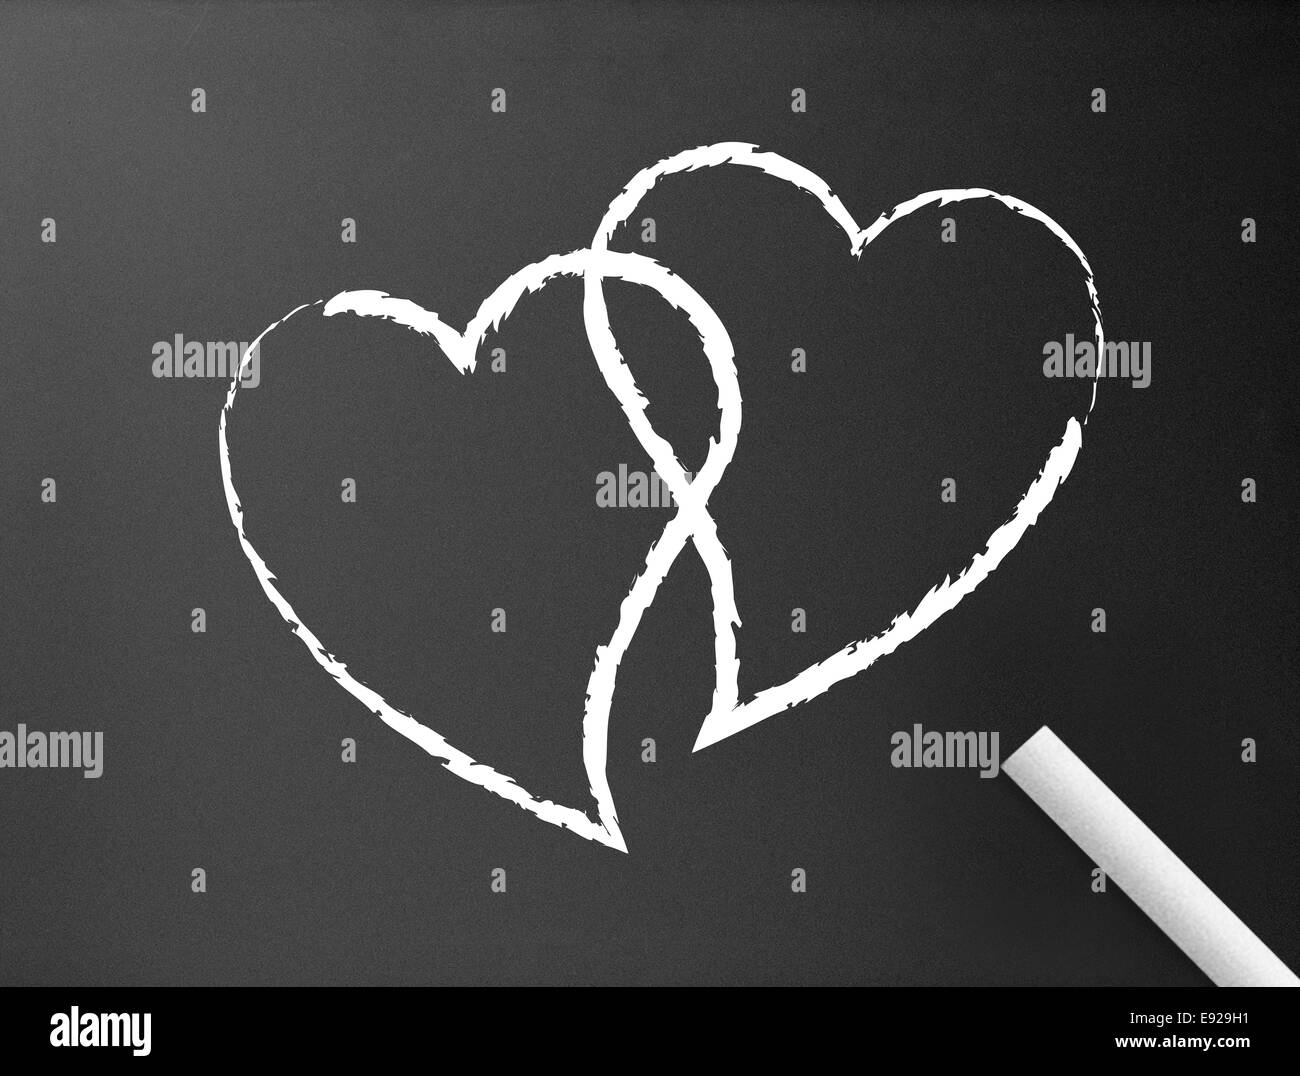 Chalkboard - Hearts Stock Photo